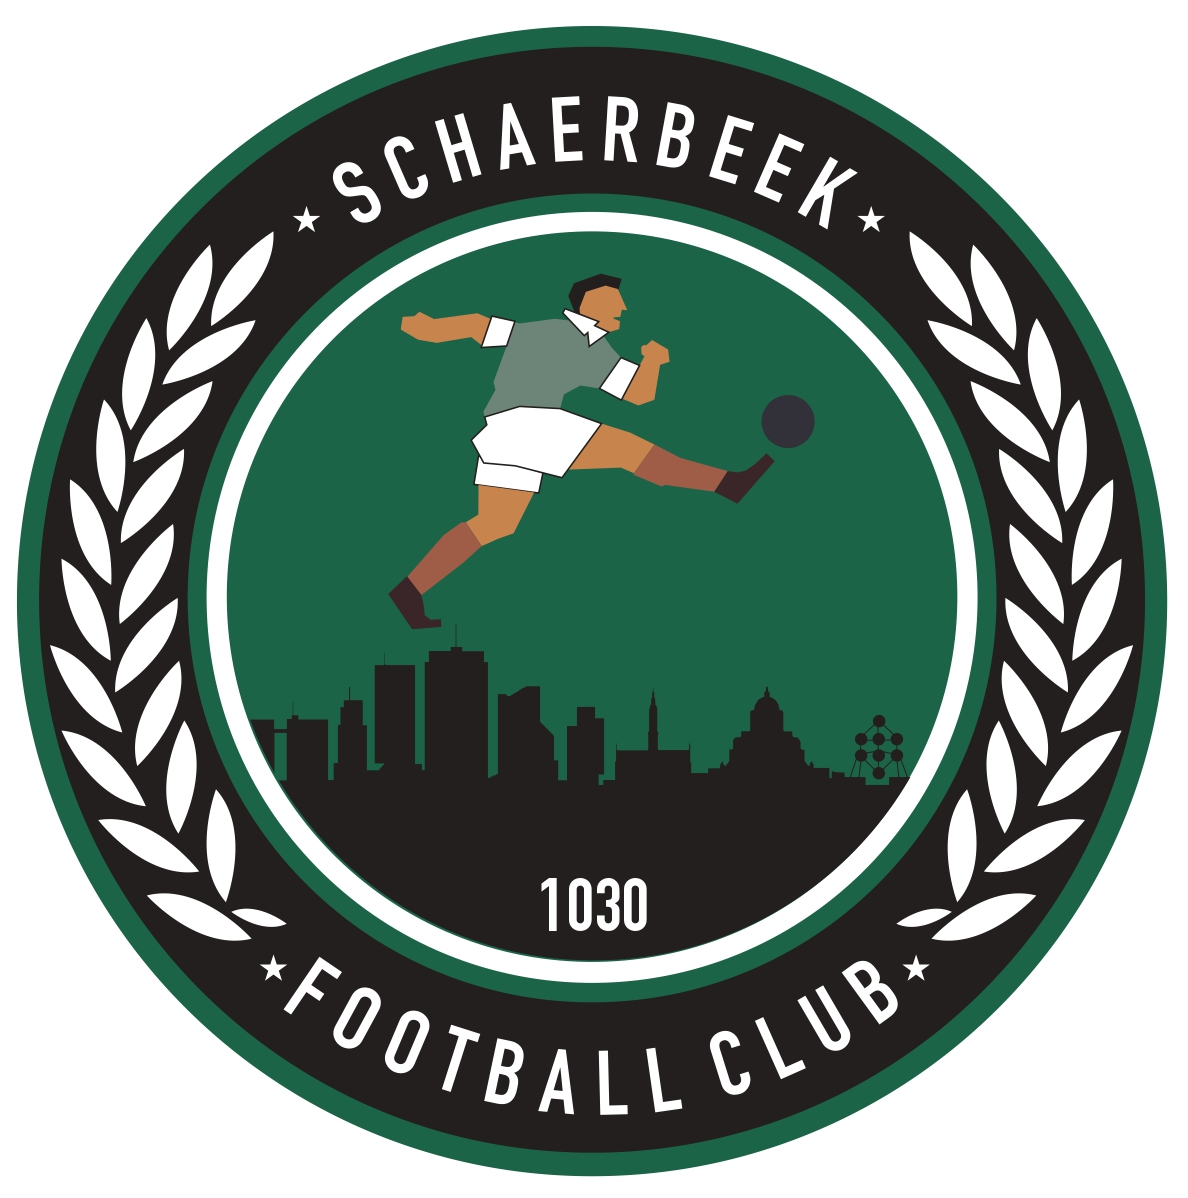 12 - Football Club Schaerbeek B